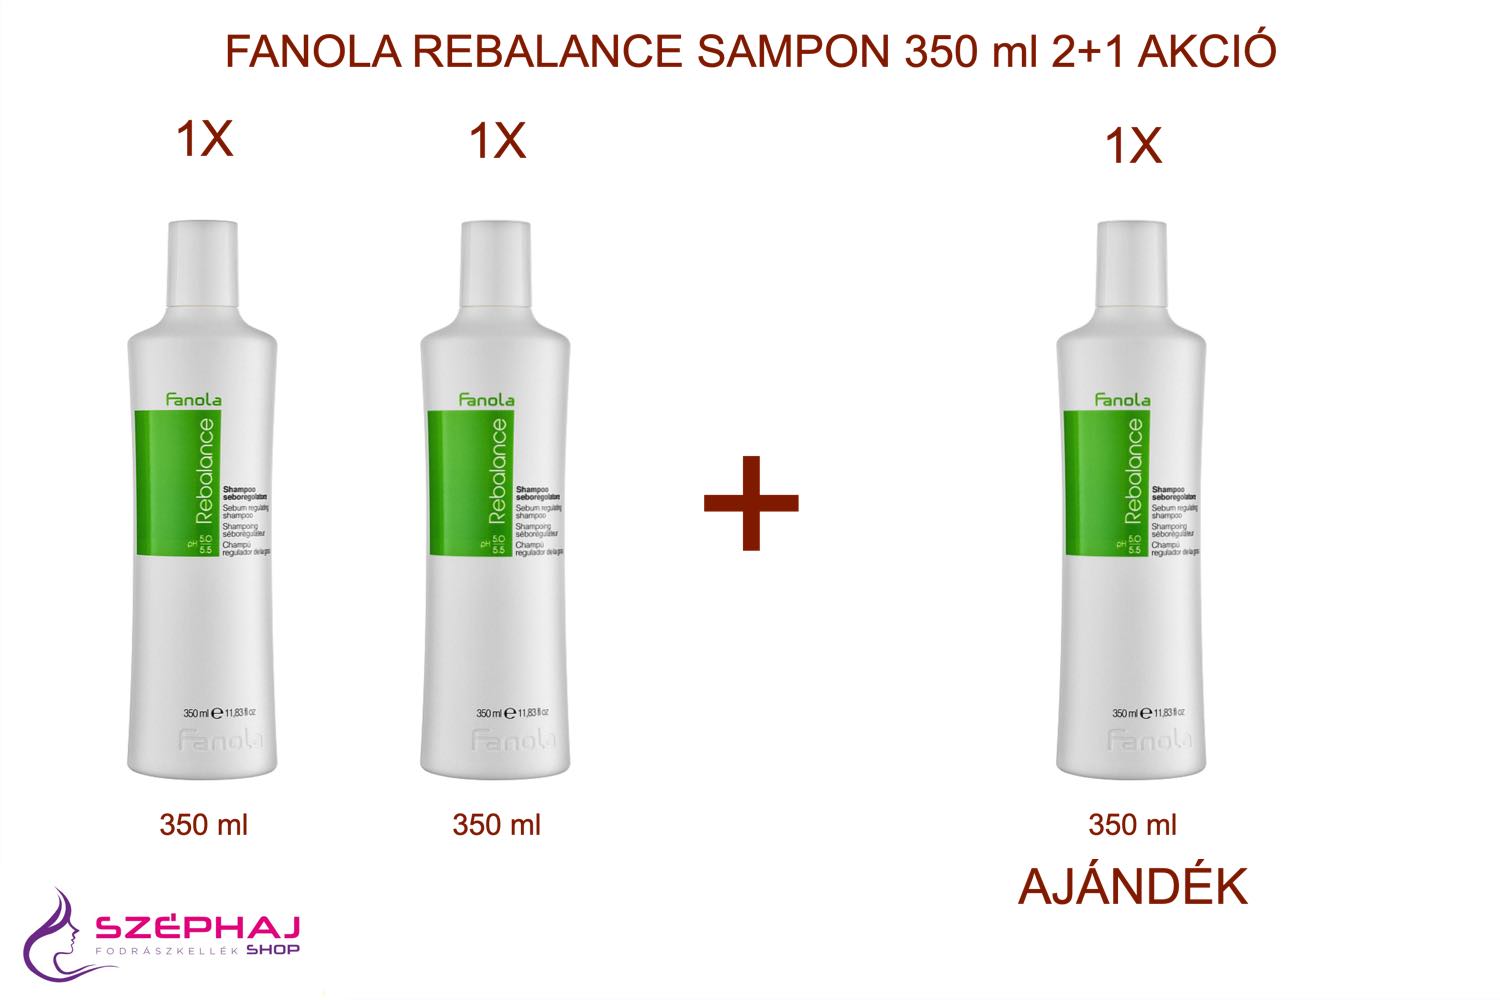 FANOLA Rebalance Anti Grease Shampoo 350 ml 2+1 AKCIÓ